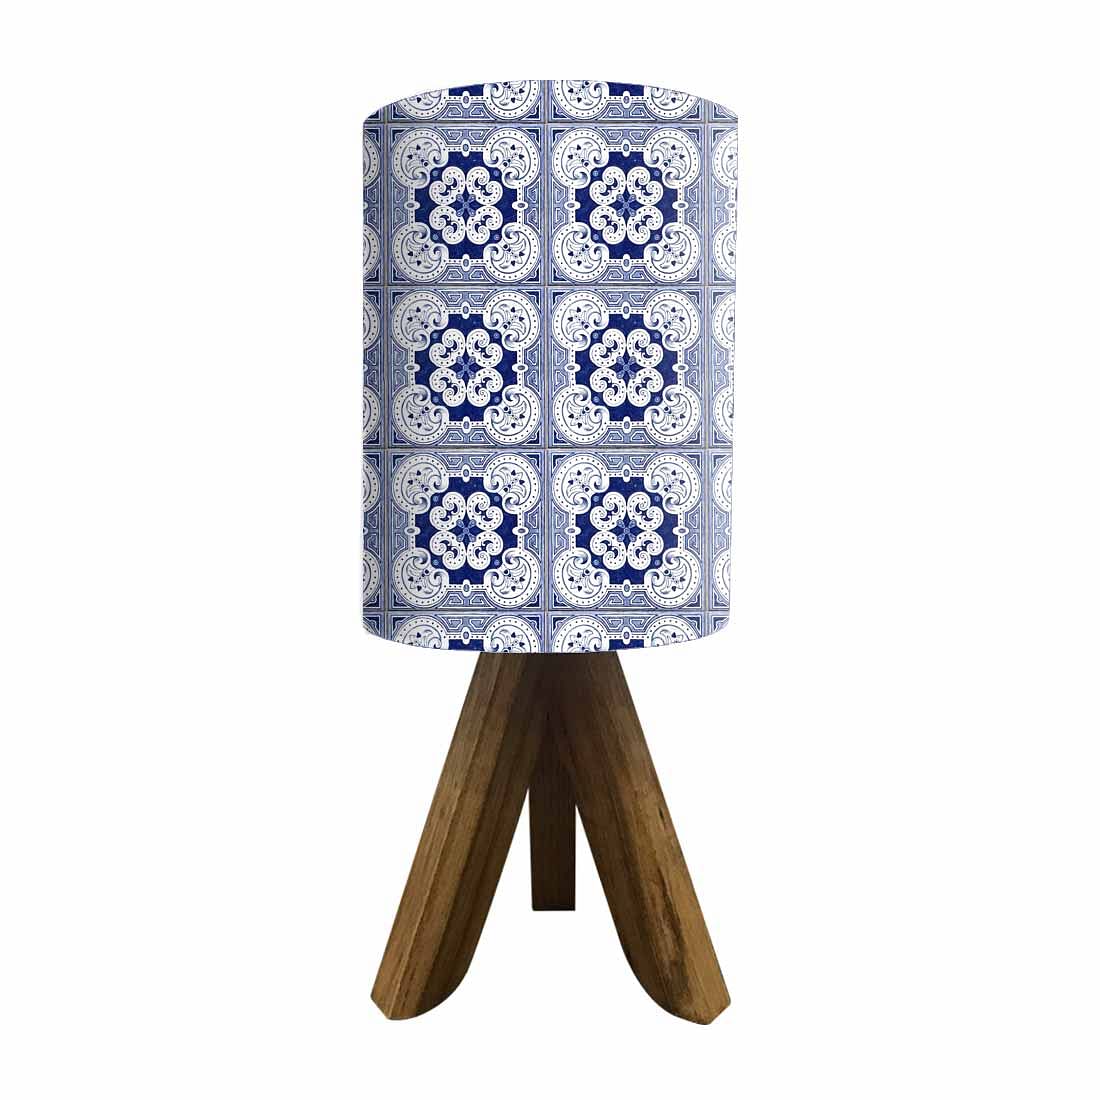 Wooden Tripod Table Lamp base For Bedroom - Square Blue Flower Tiles Nutcase